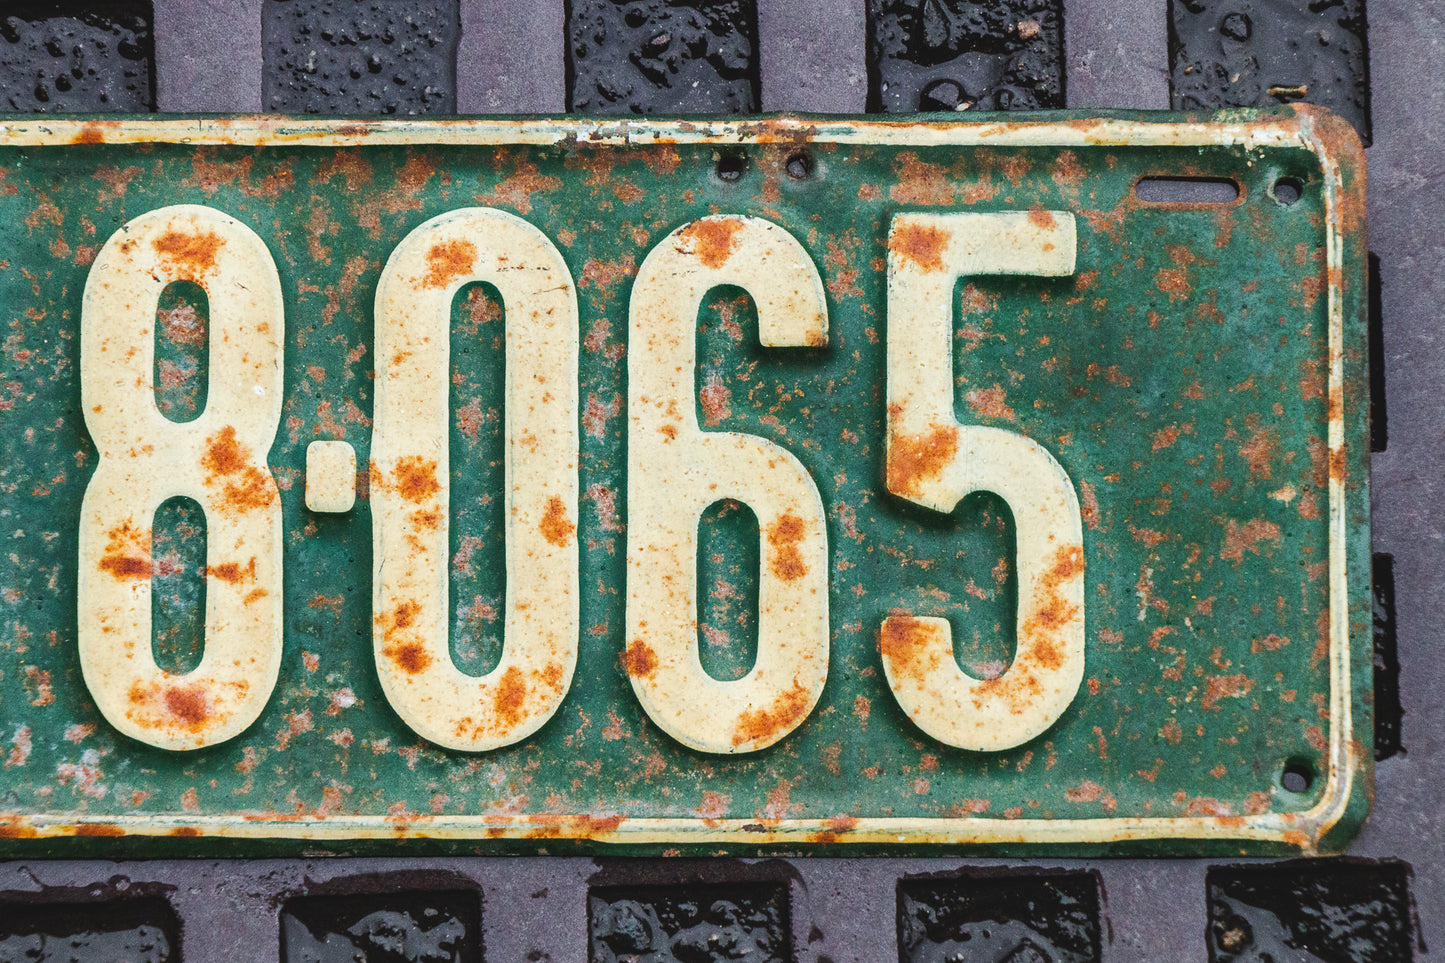 1924 Kansas License Plate Vintage Wall Decor 318-065